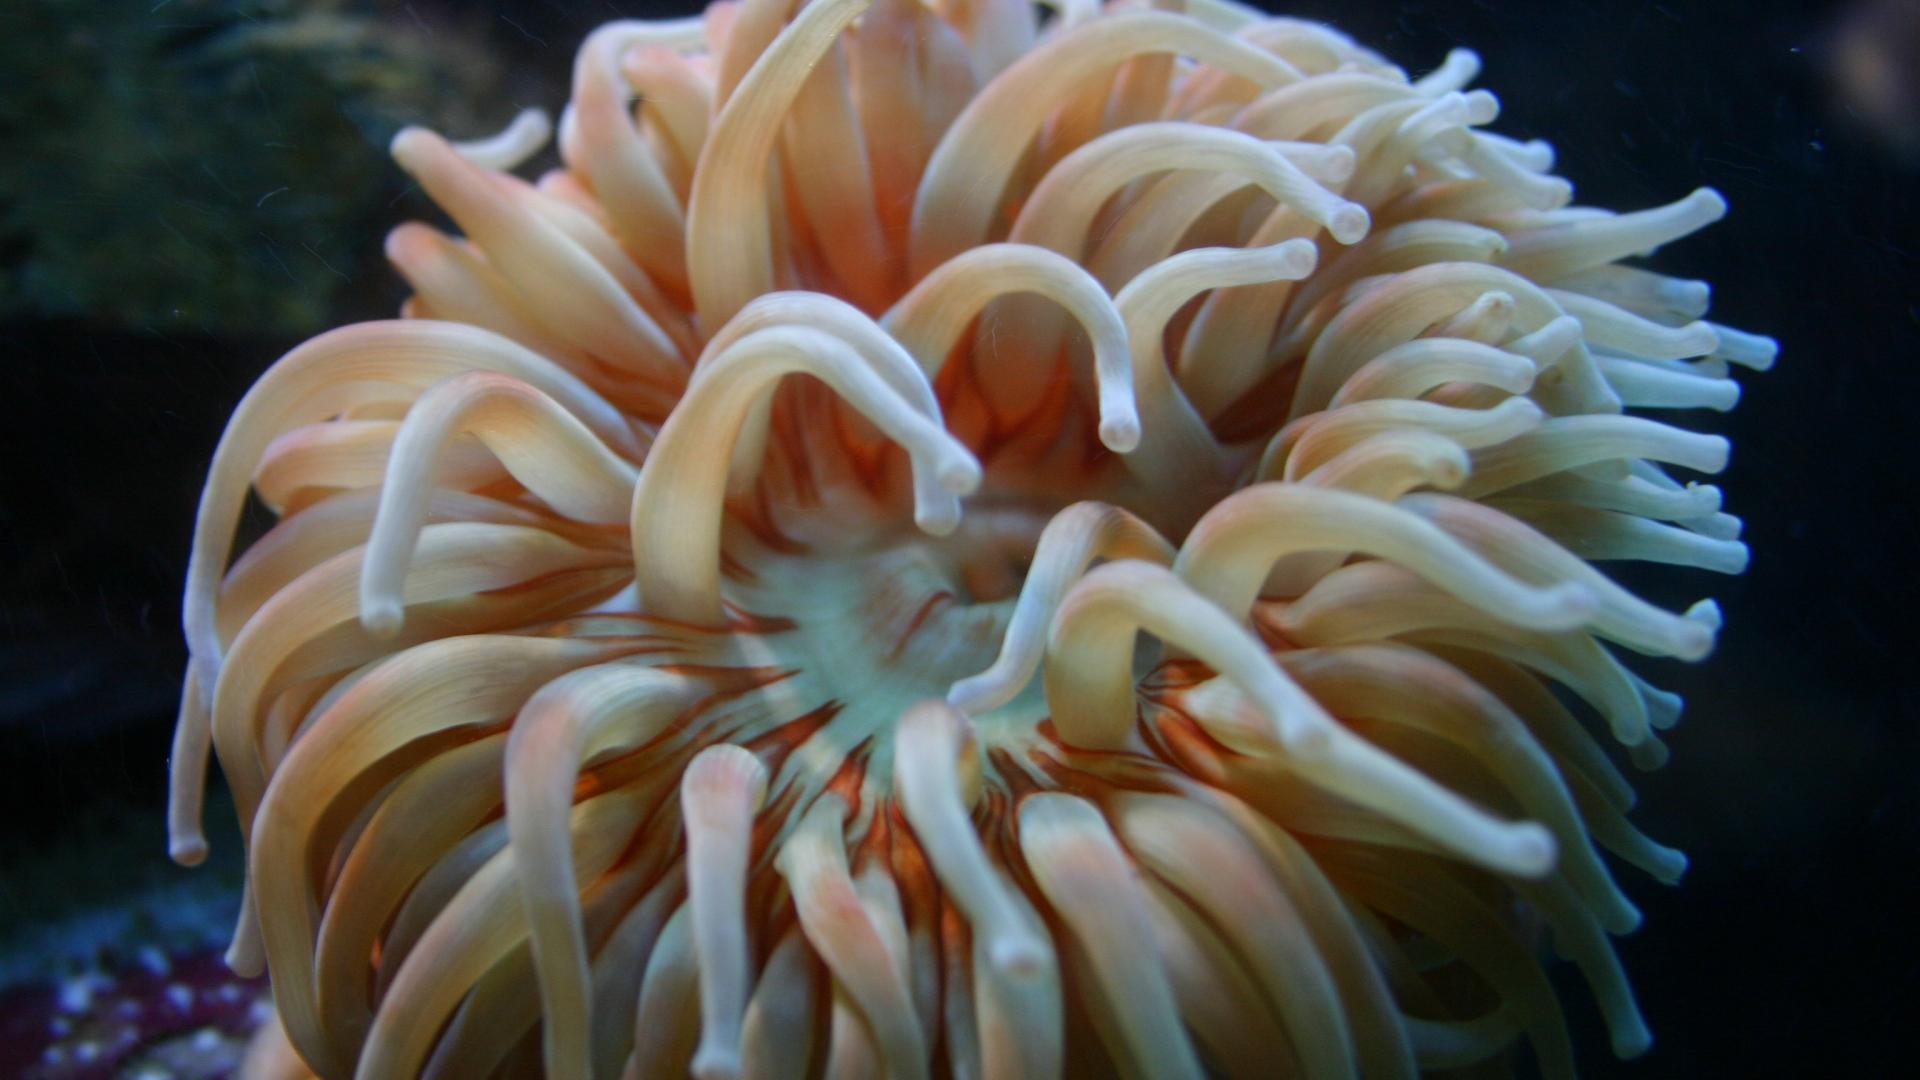 Dahlia anemone yn wely’r môr